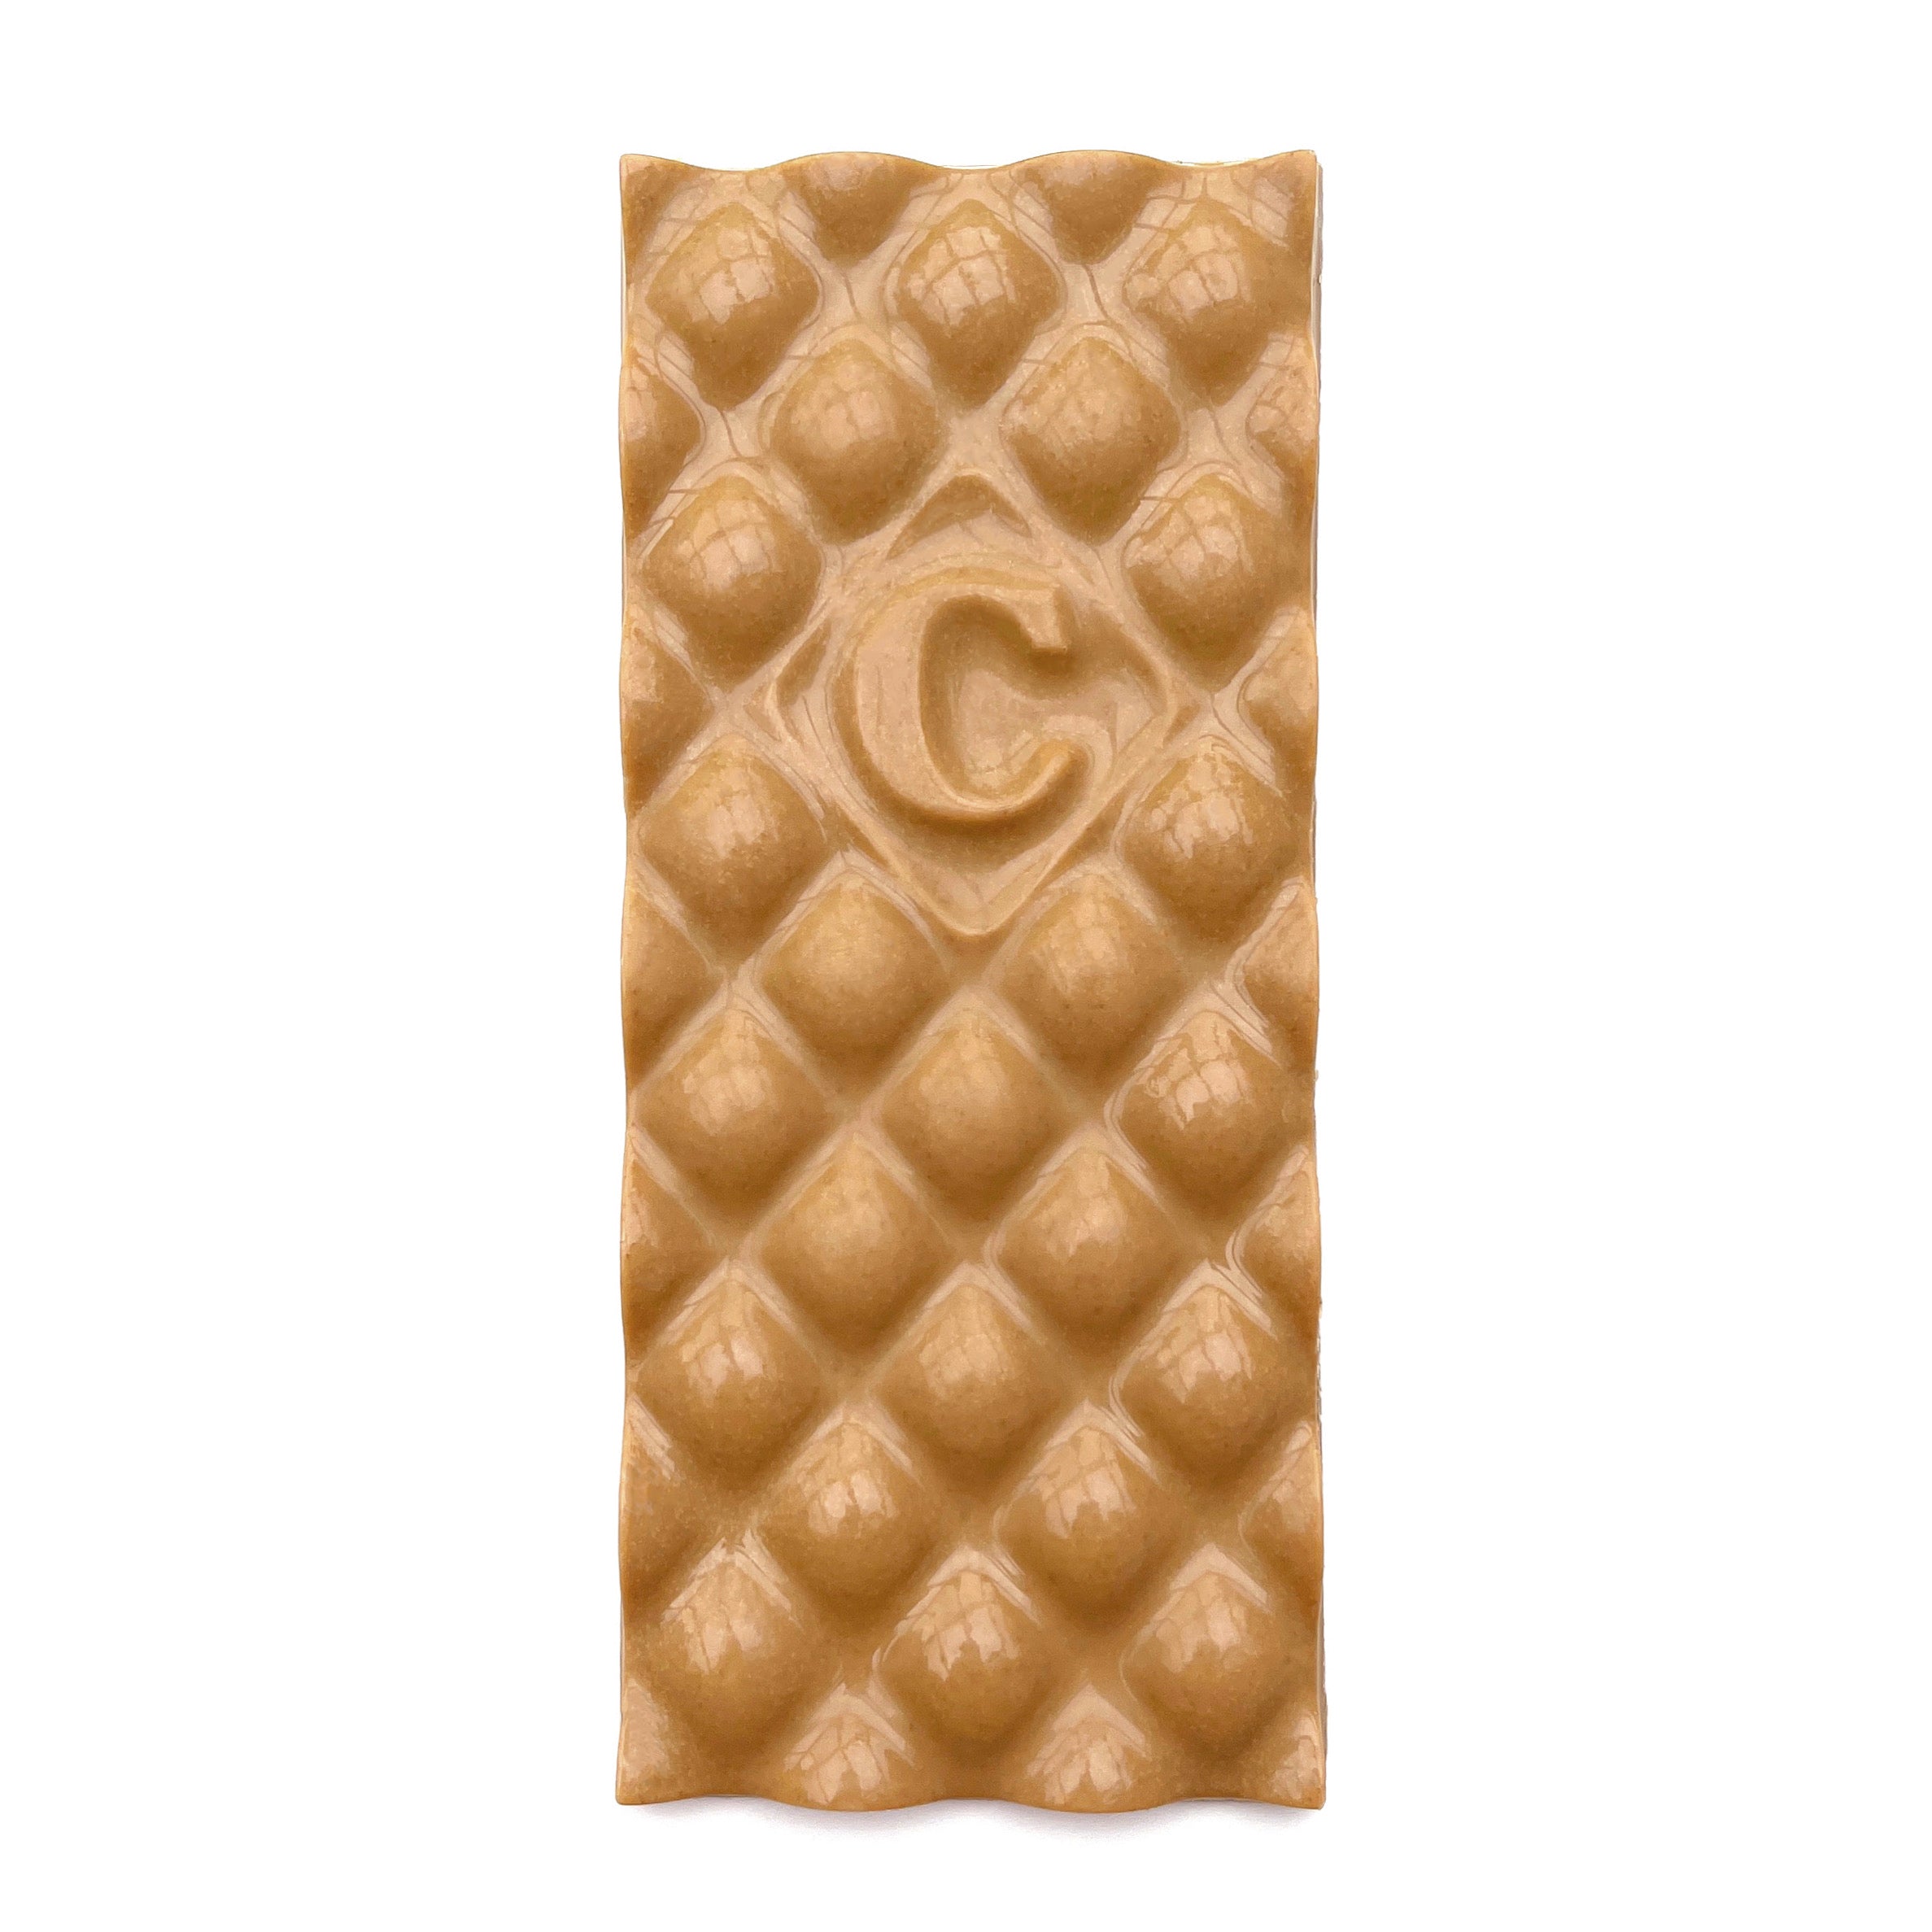 CARAMEL LATTE (BLONDE) | 30% COCOA - White Chocolate Bars